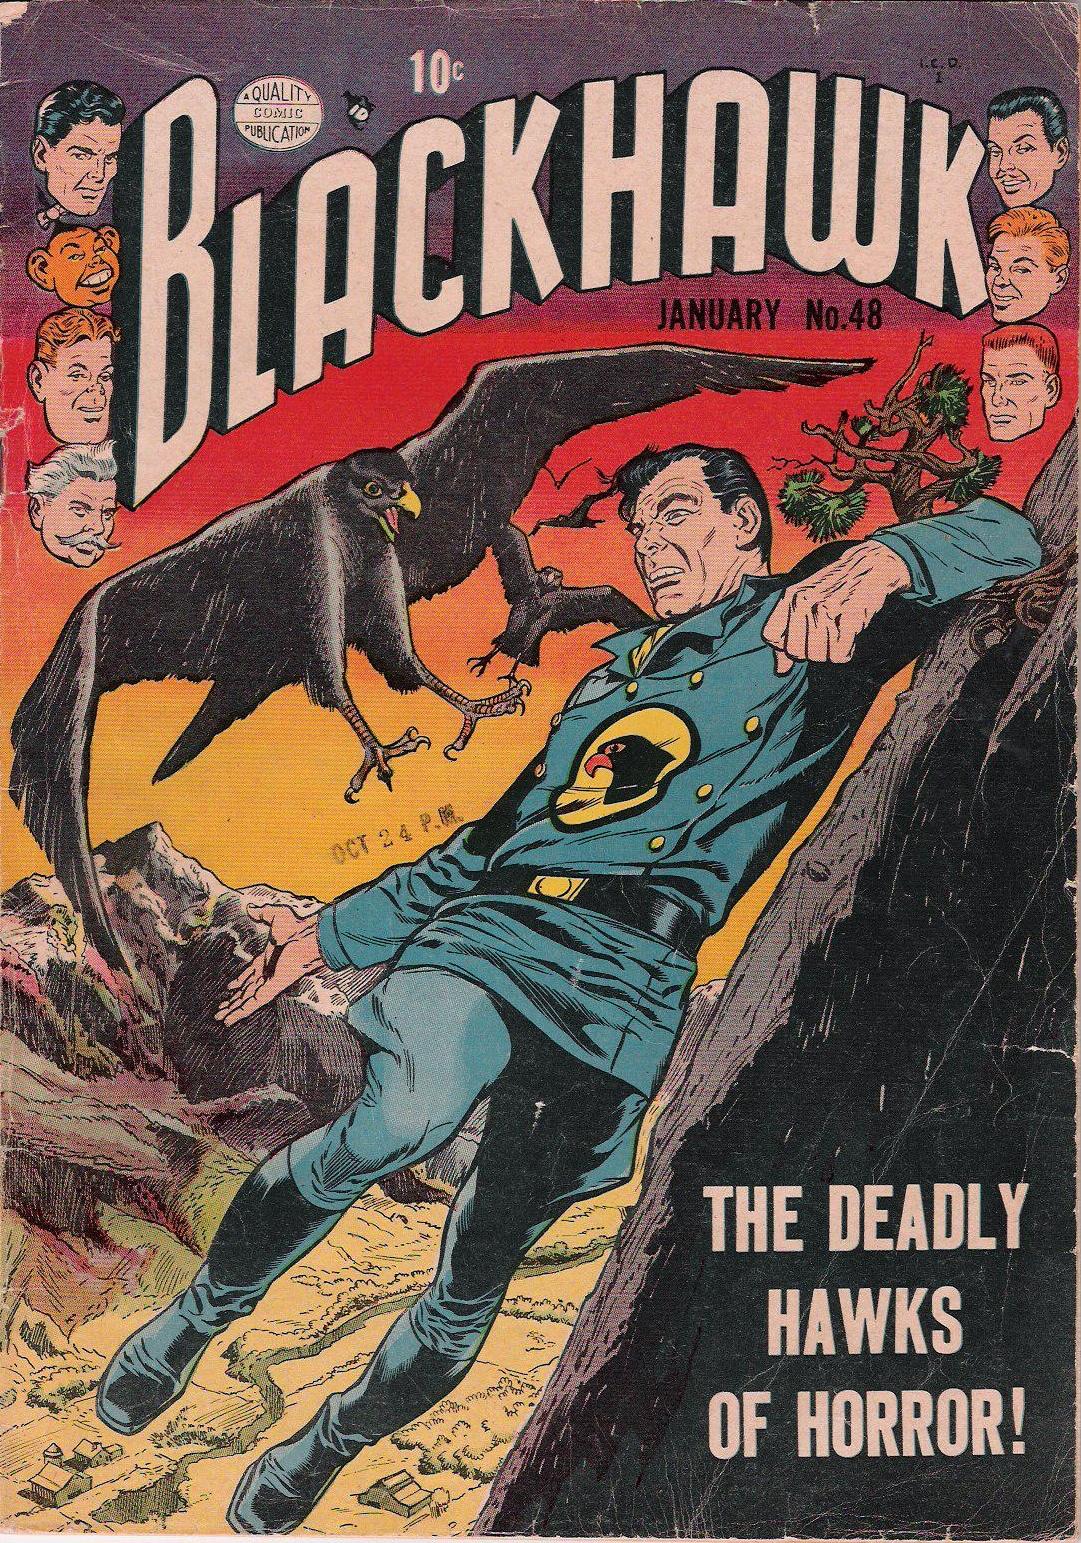 Blackhawk Vol. 1 #48